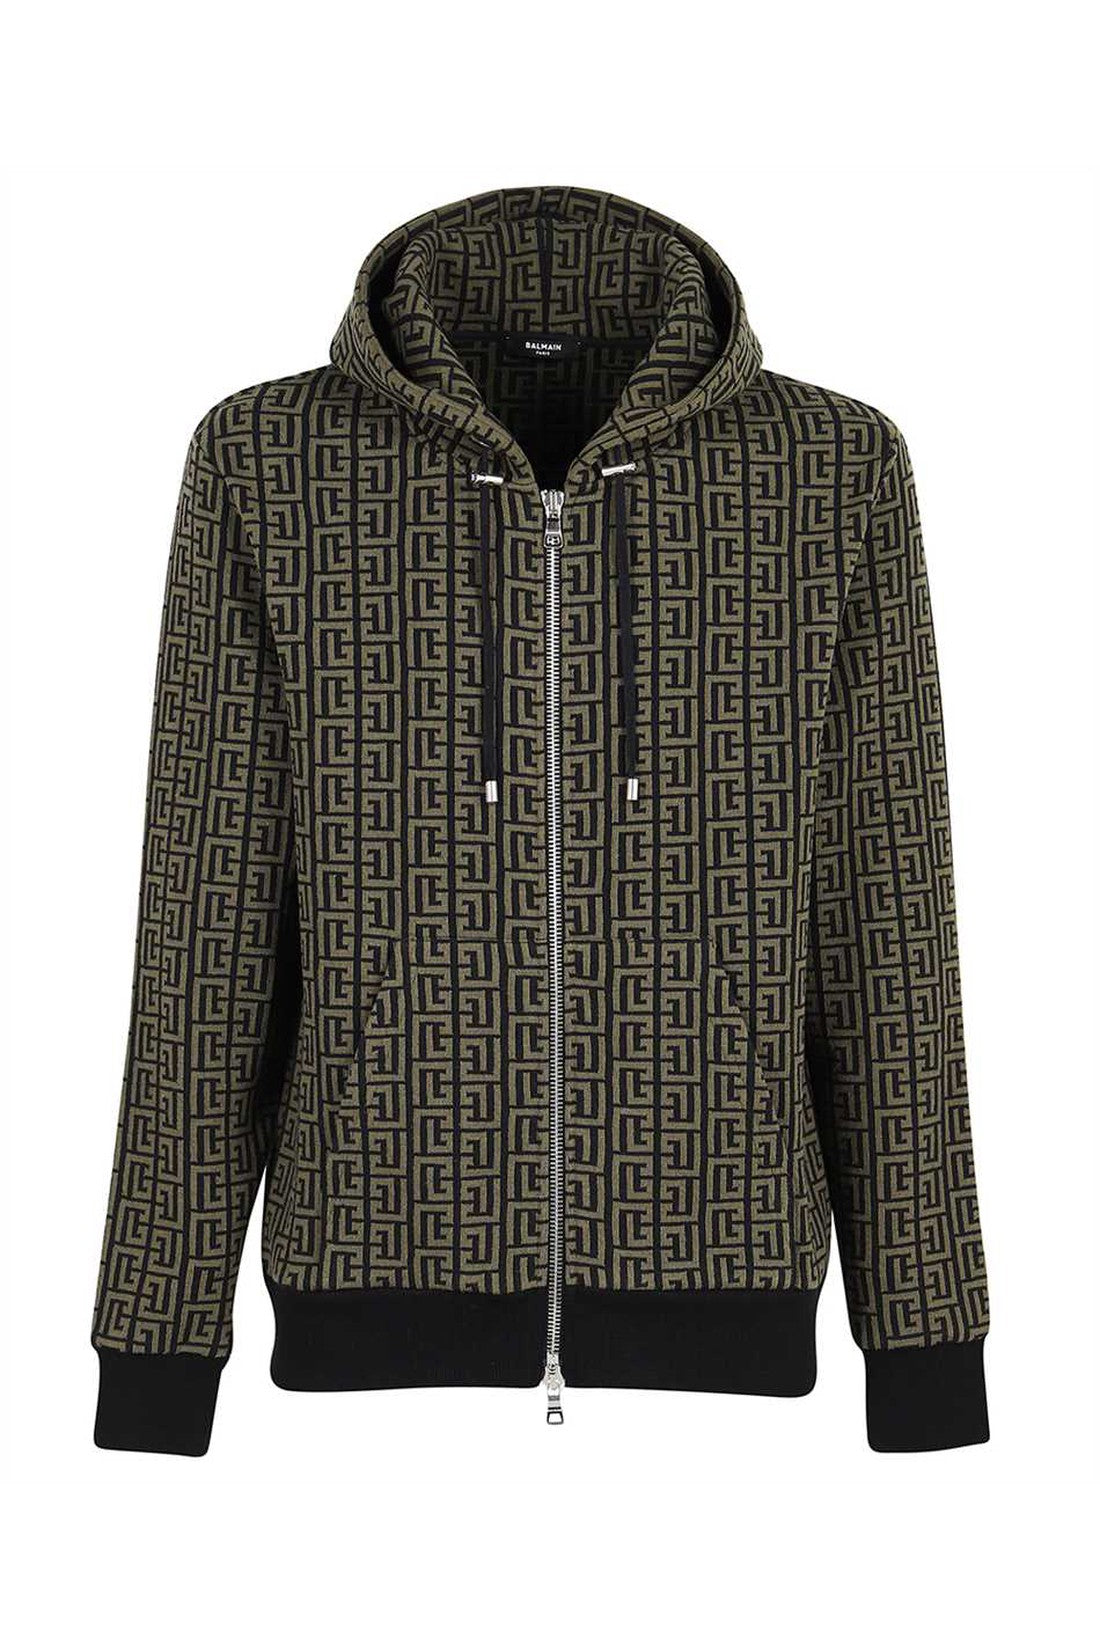 Balmain-OUTLET-SALE-Knitted full-zip sweatshirt-ARCHIVIST